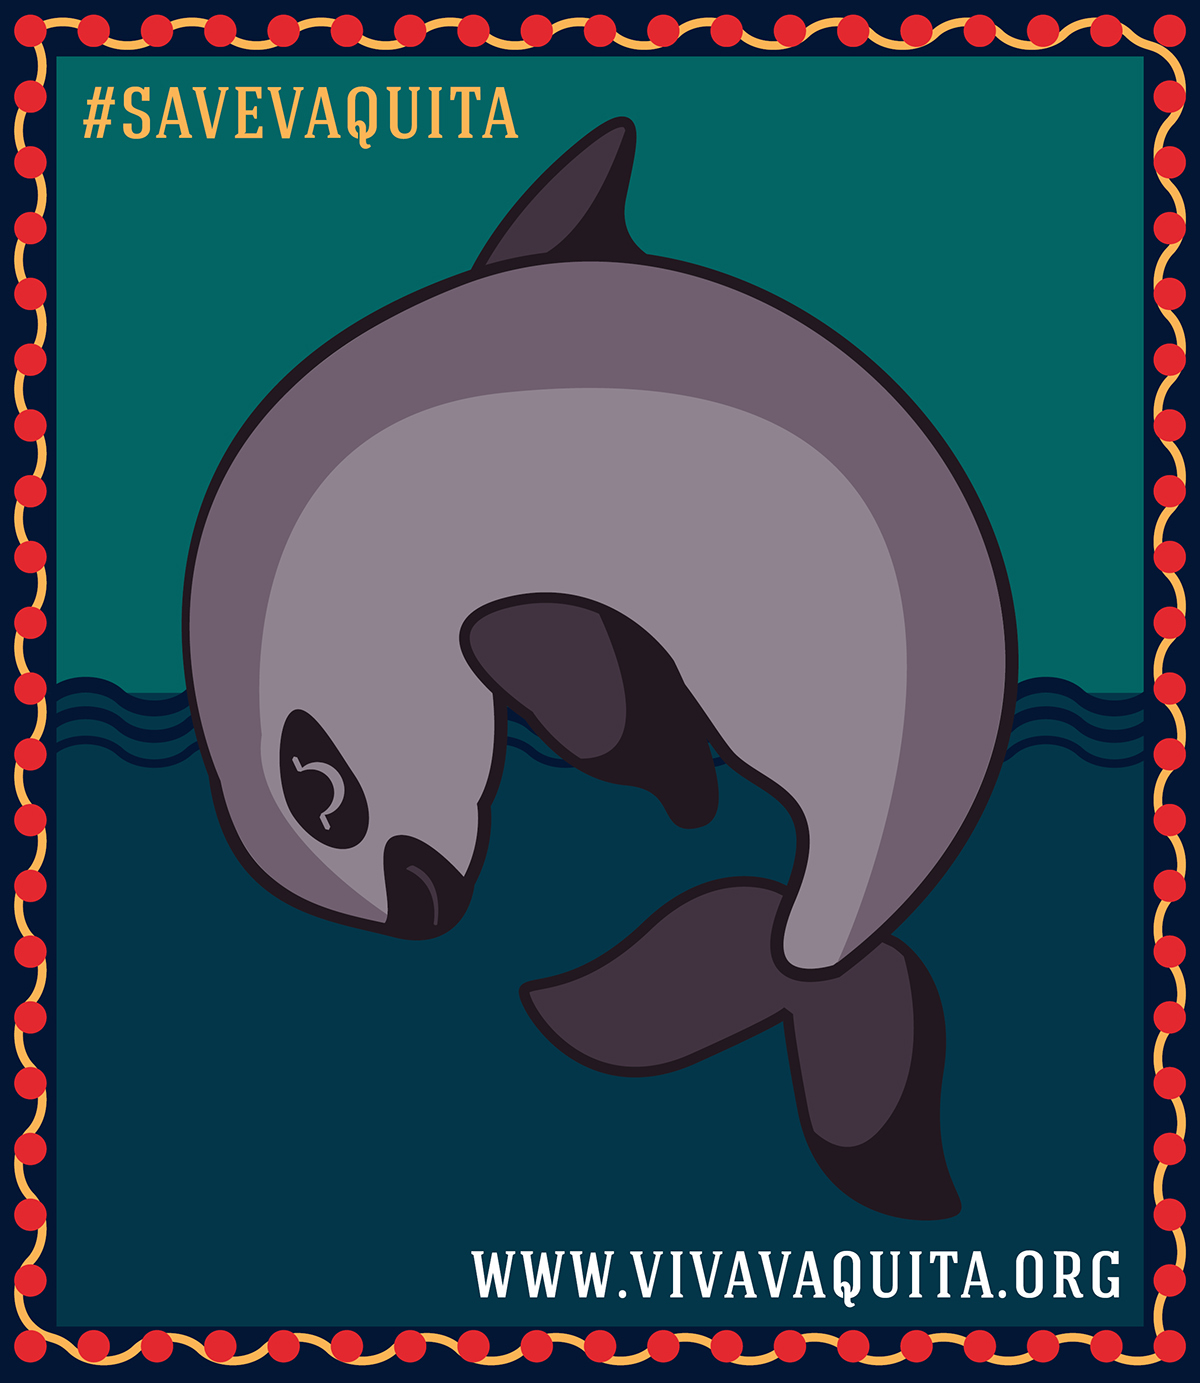 #vaquita #savevaquita sealife Nature Ocean environment Protect